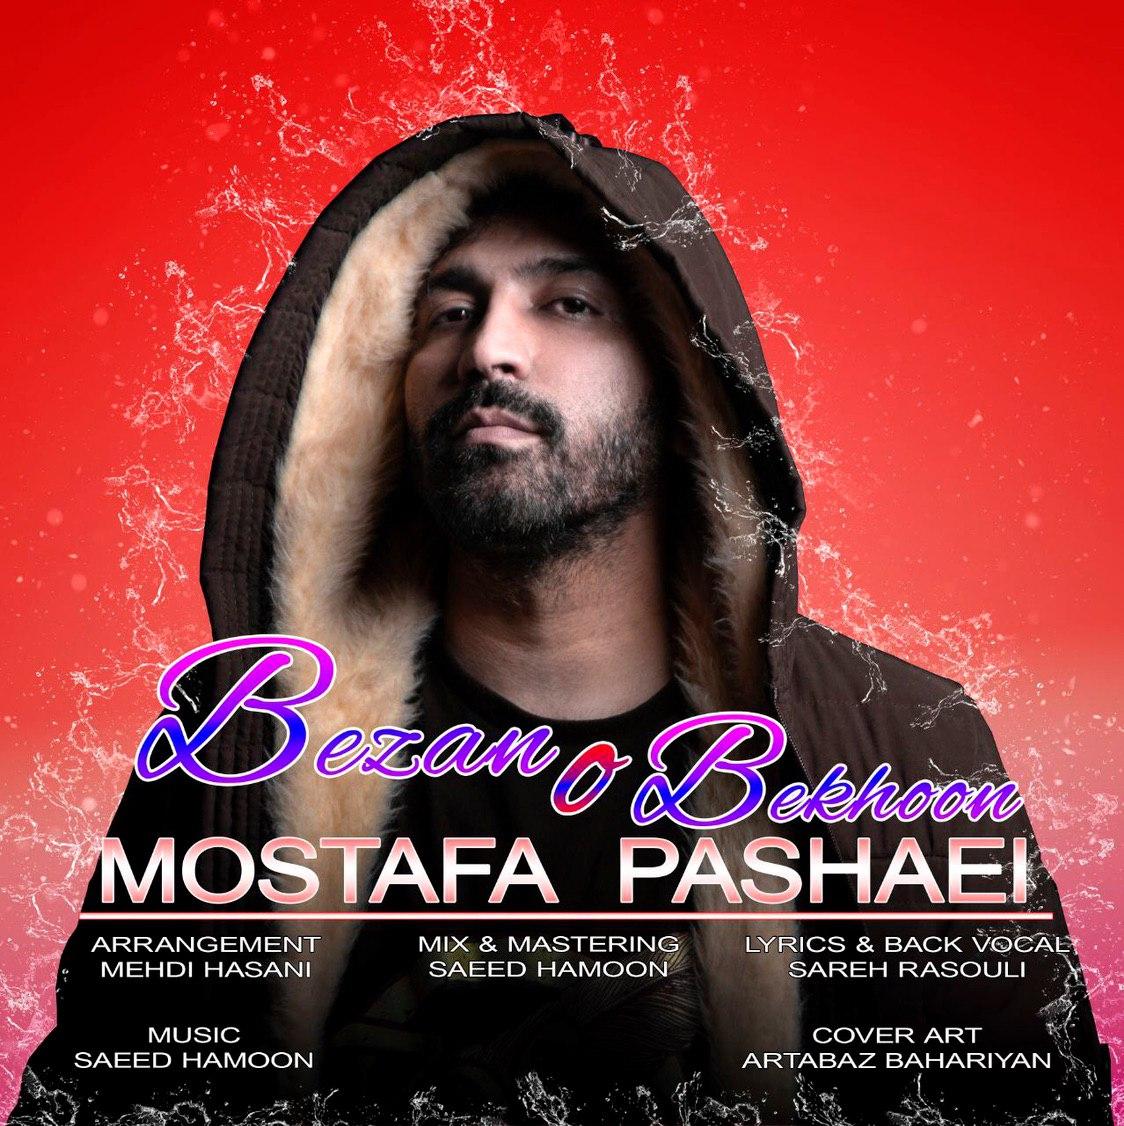 Mostafa Pashaei Bezano Bekhoon 